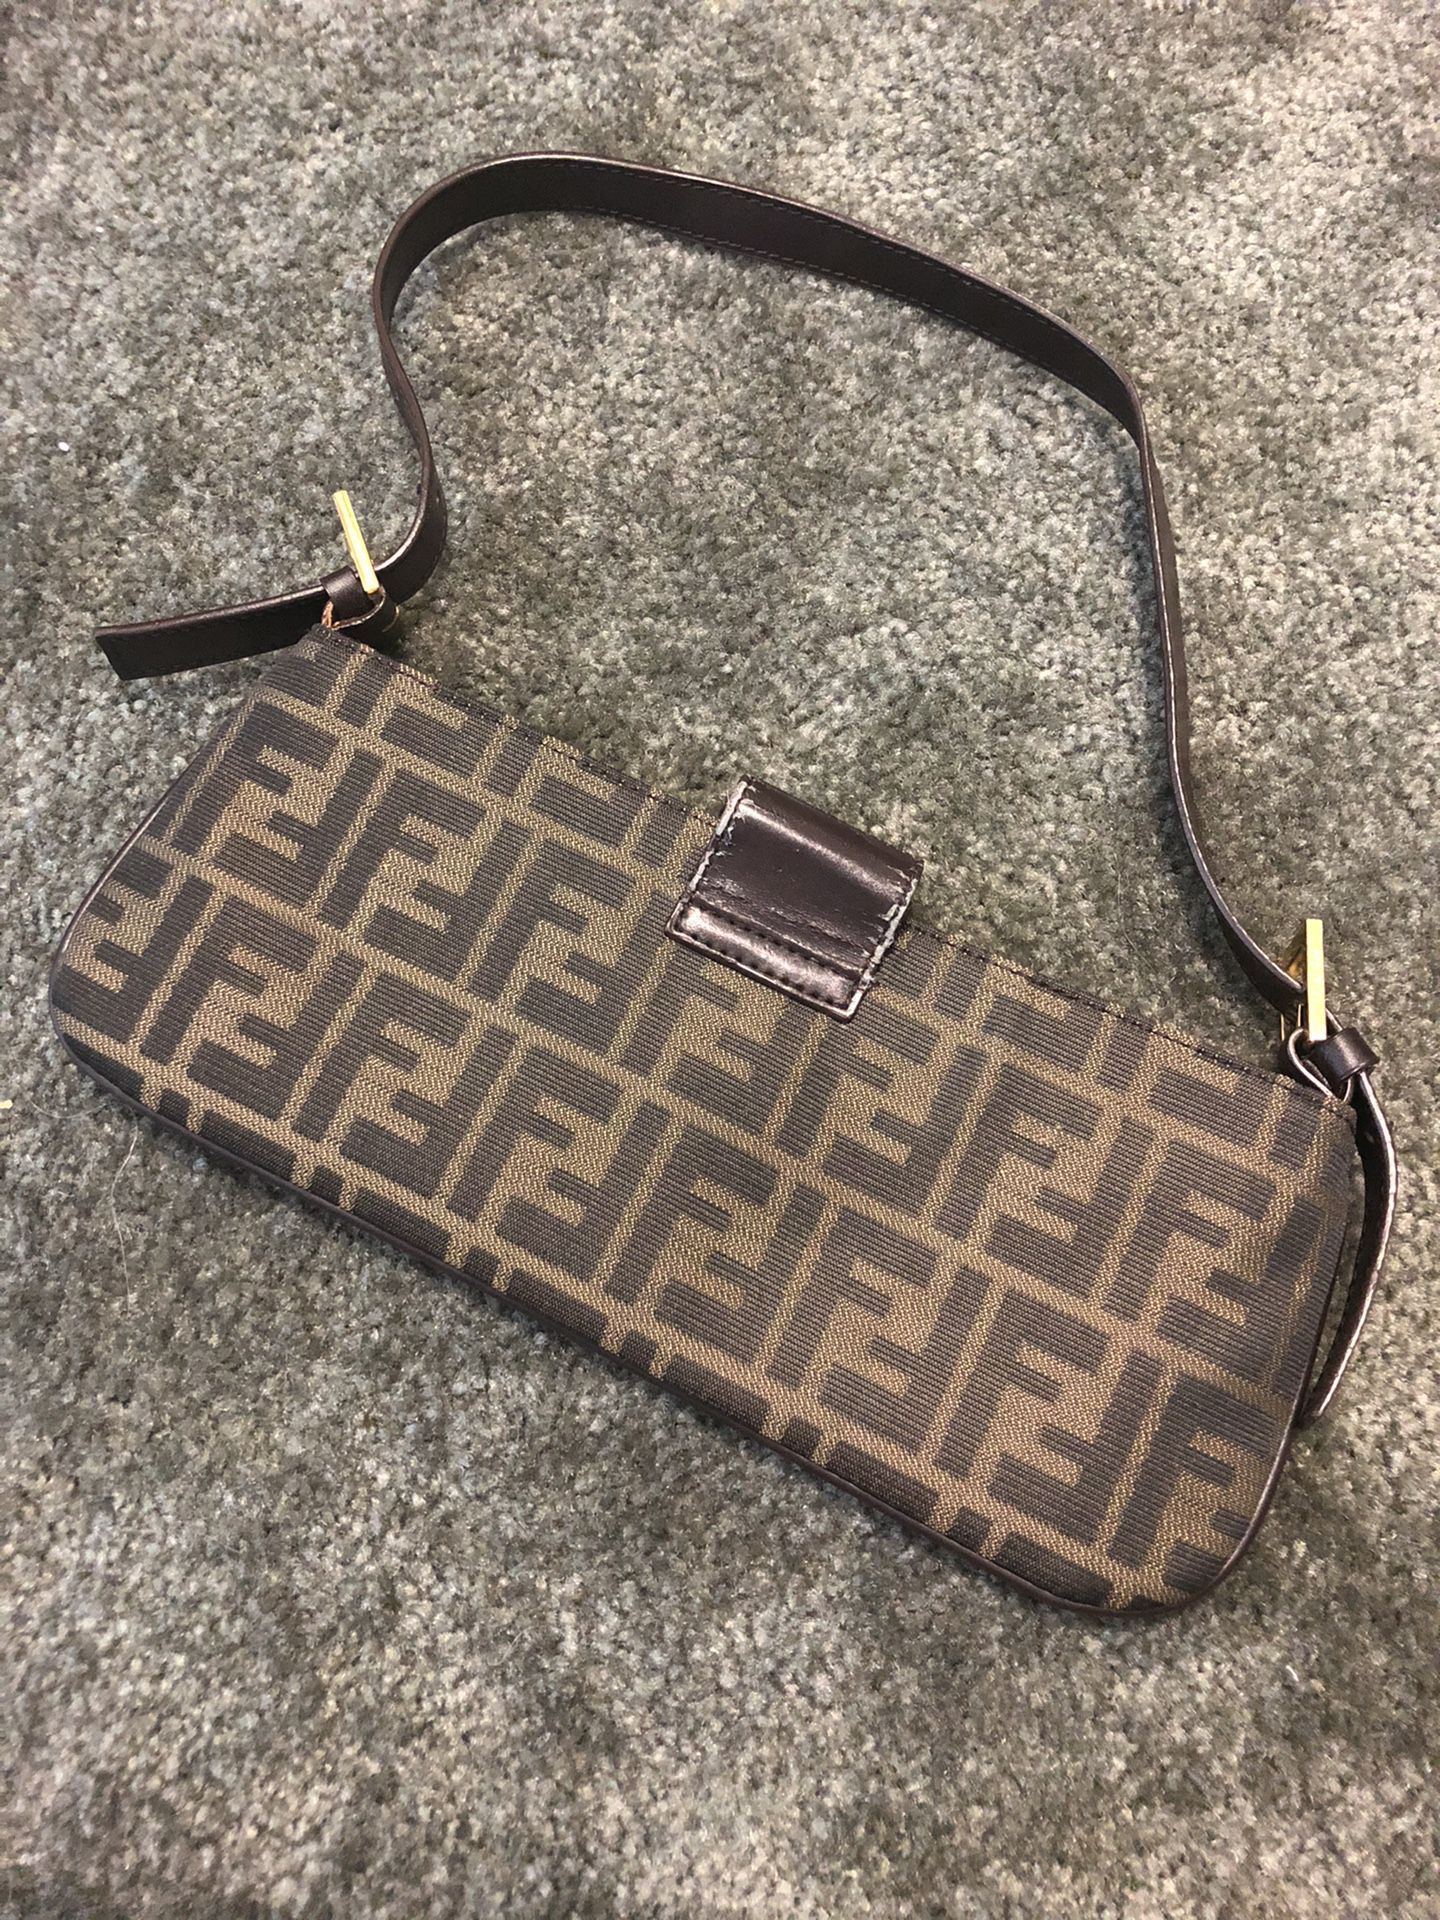 FENDI purse wallet handbag